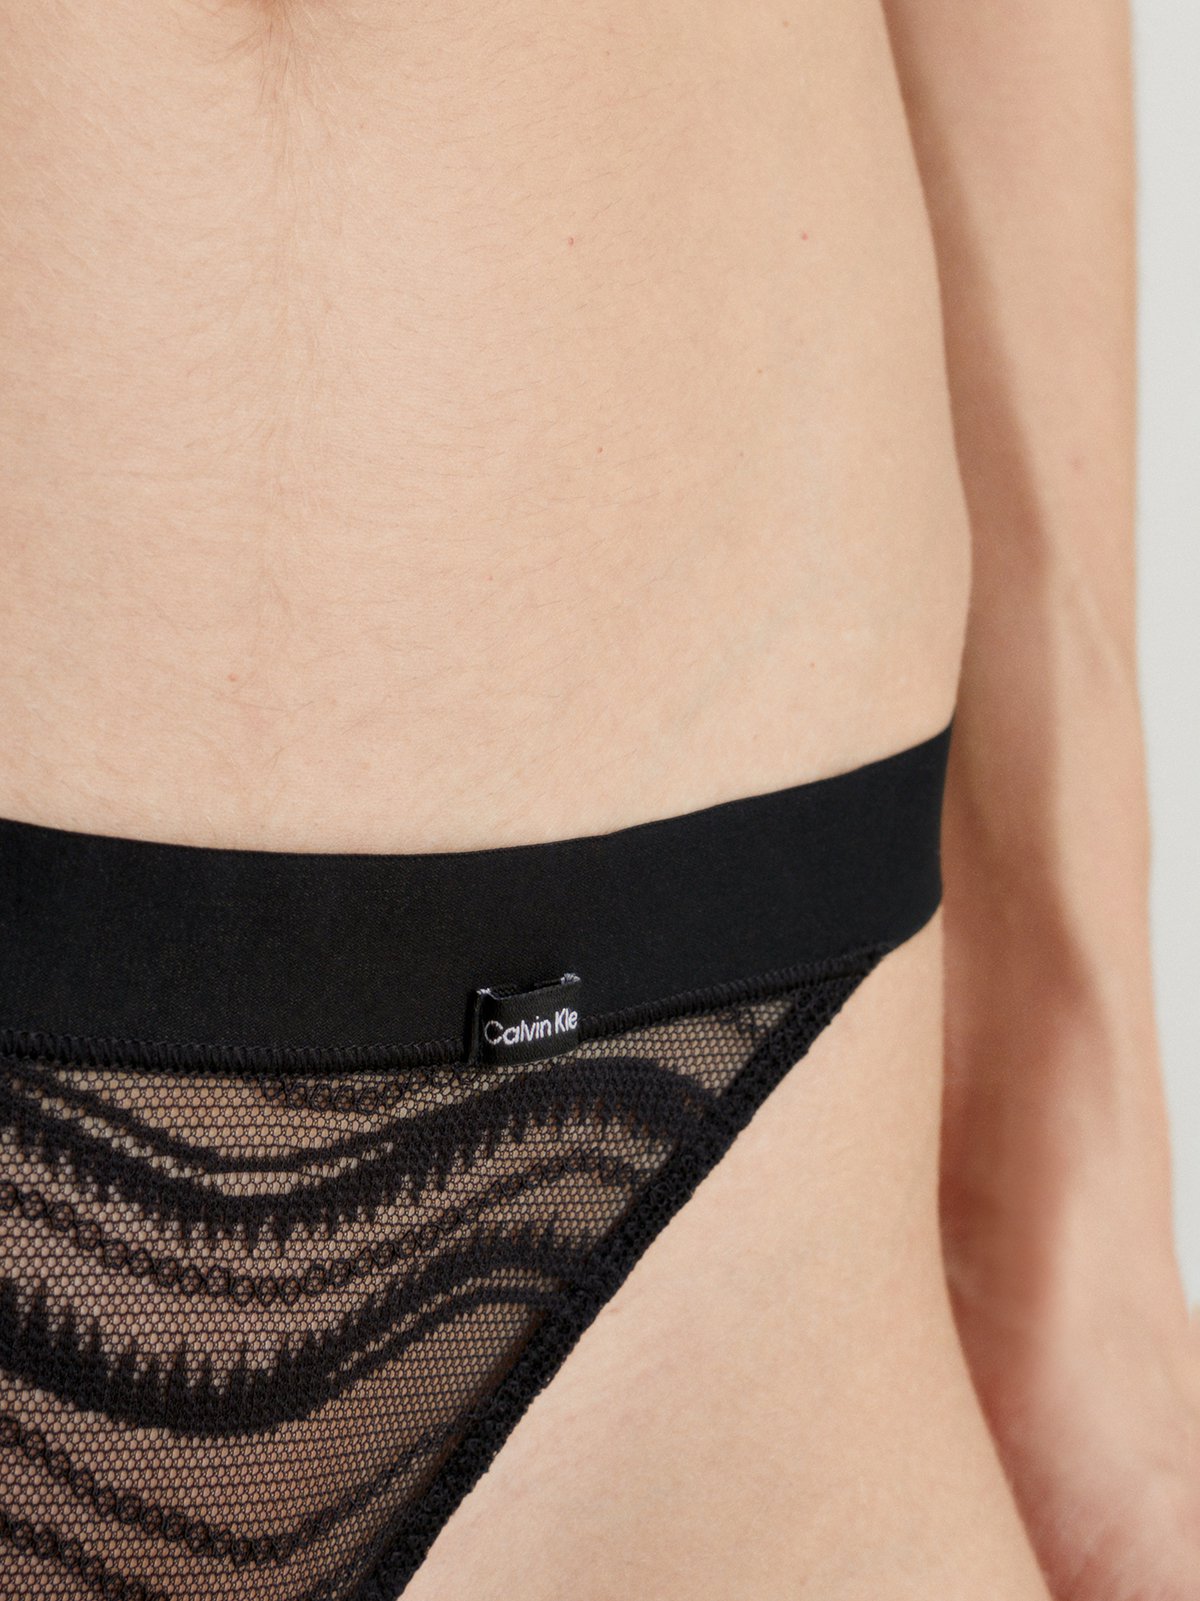 Women's panties black Calvin Klein Underwear